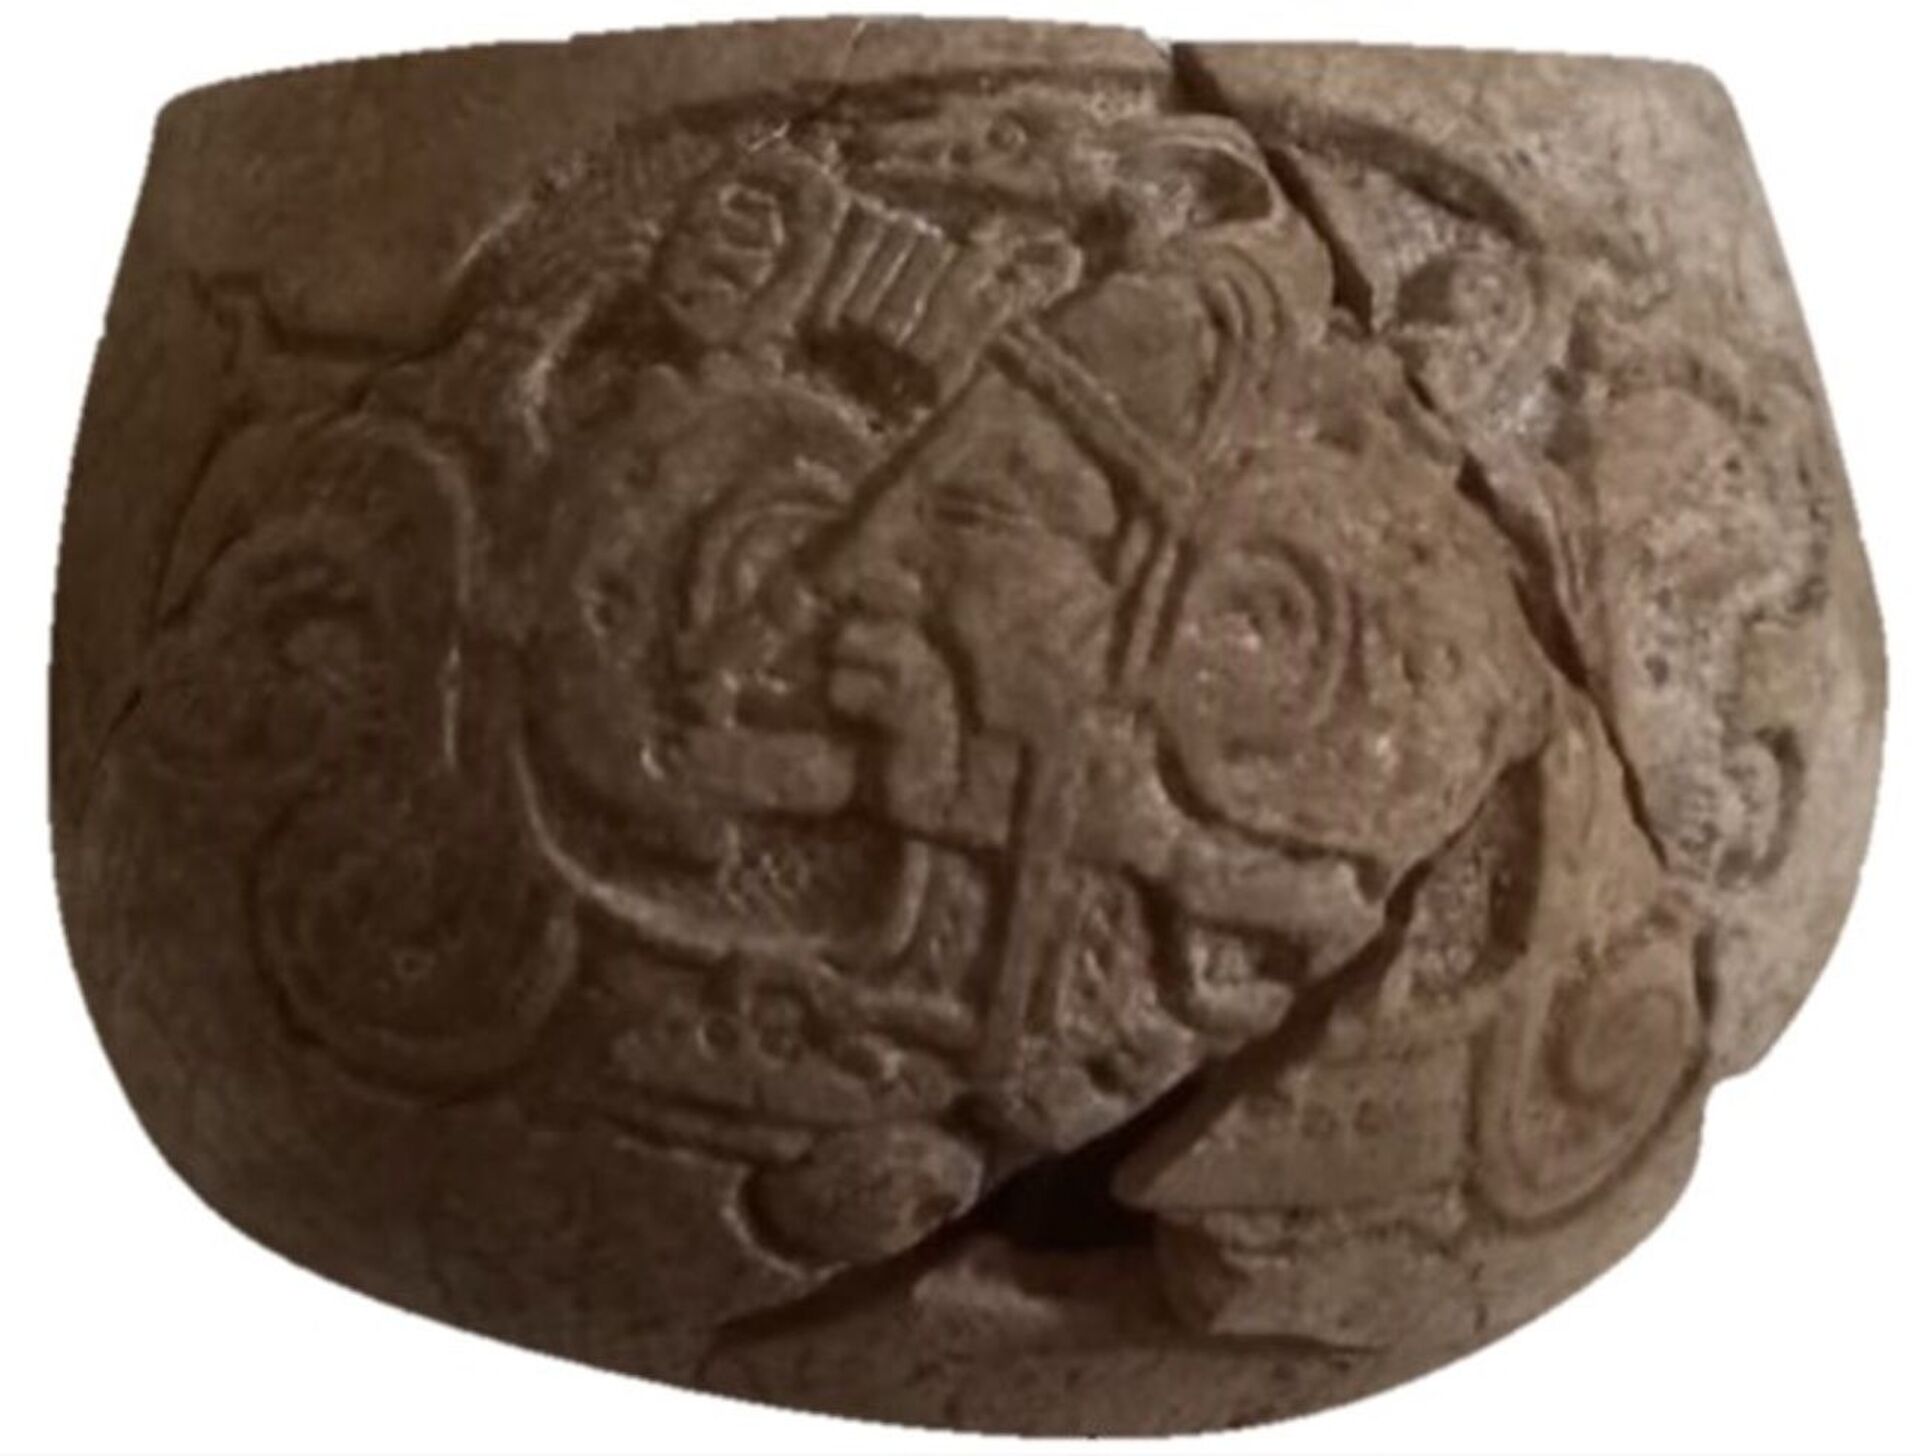 Recipiente antigo com escrita hieroglífica maia descoberto na península de Yucatán no México - Sputnik Brasil, 1920, 09.11.2021